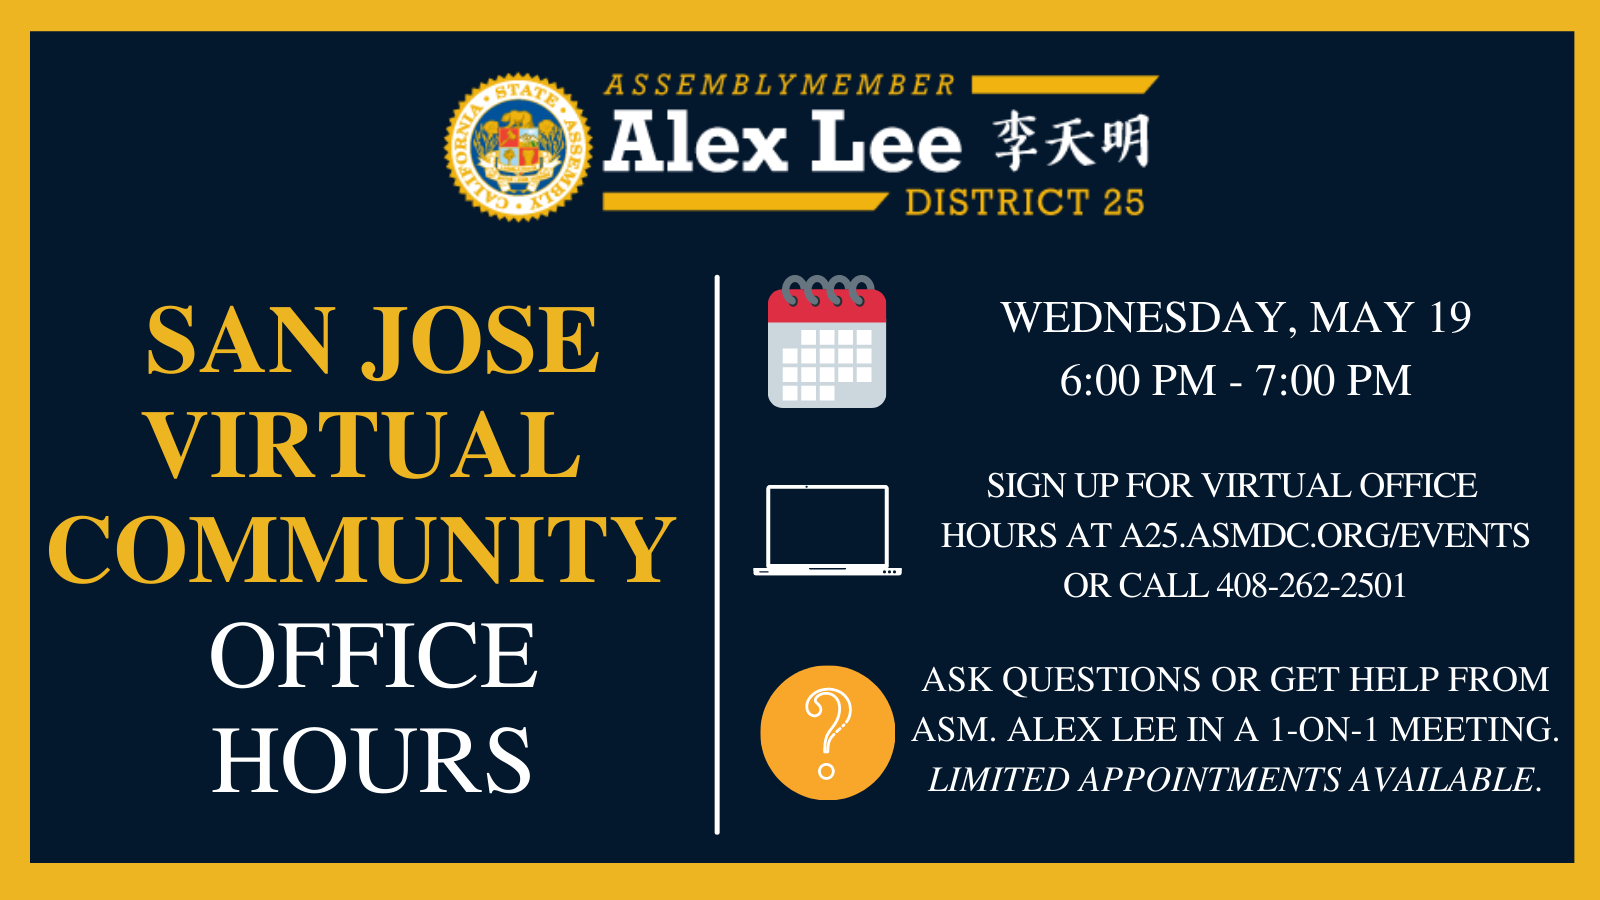 San Jose Virtual Community Office Hours